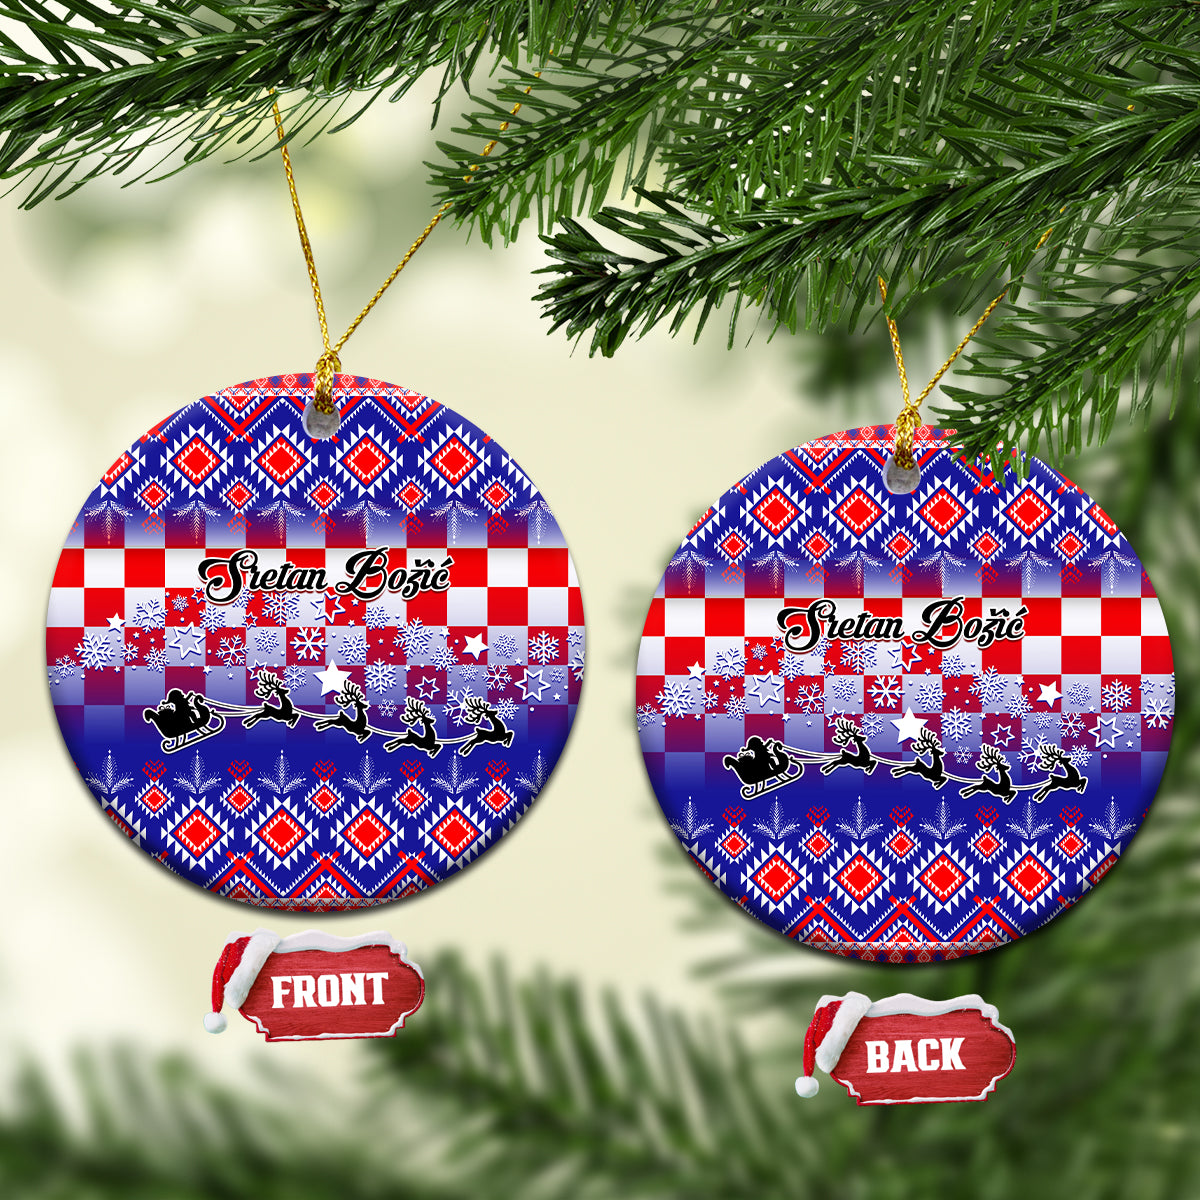 croatia-christmas-ceramic-ornament-sretan-bozic-croatian-embroidery-patterns